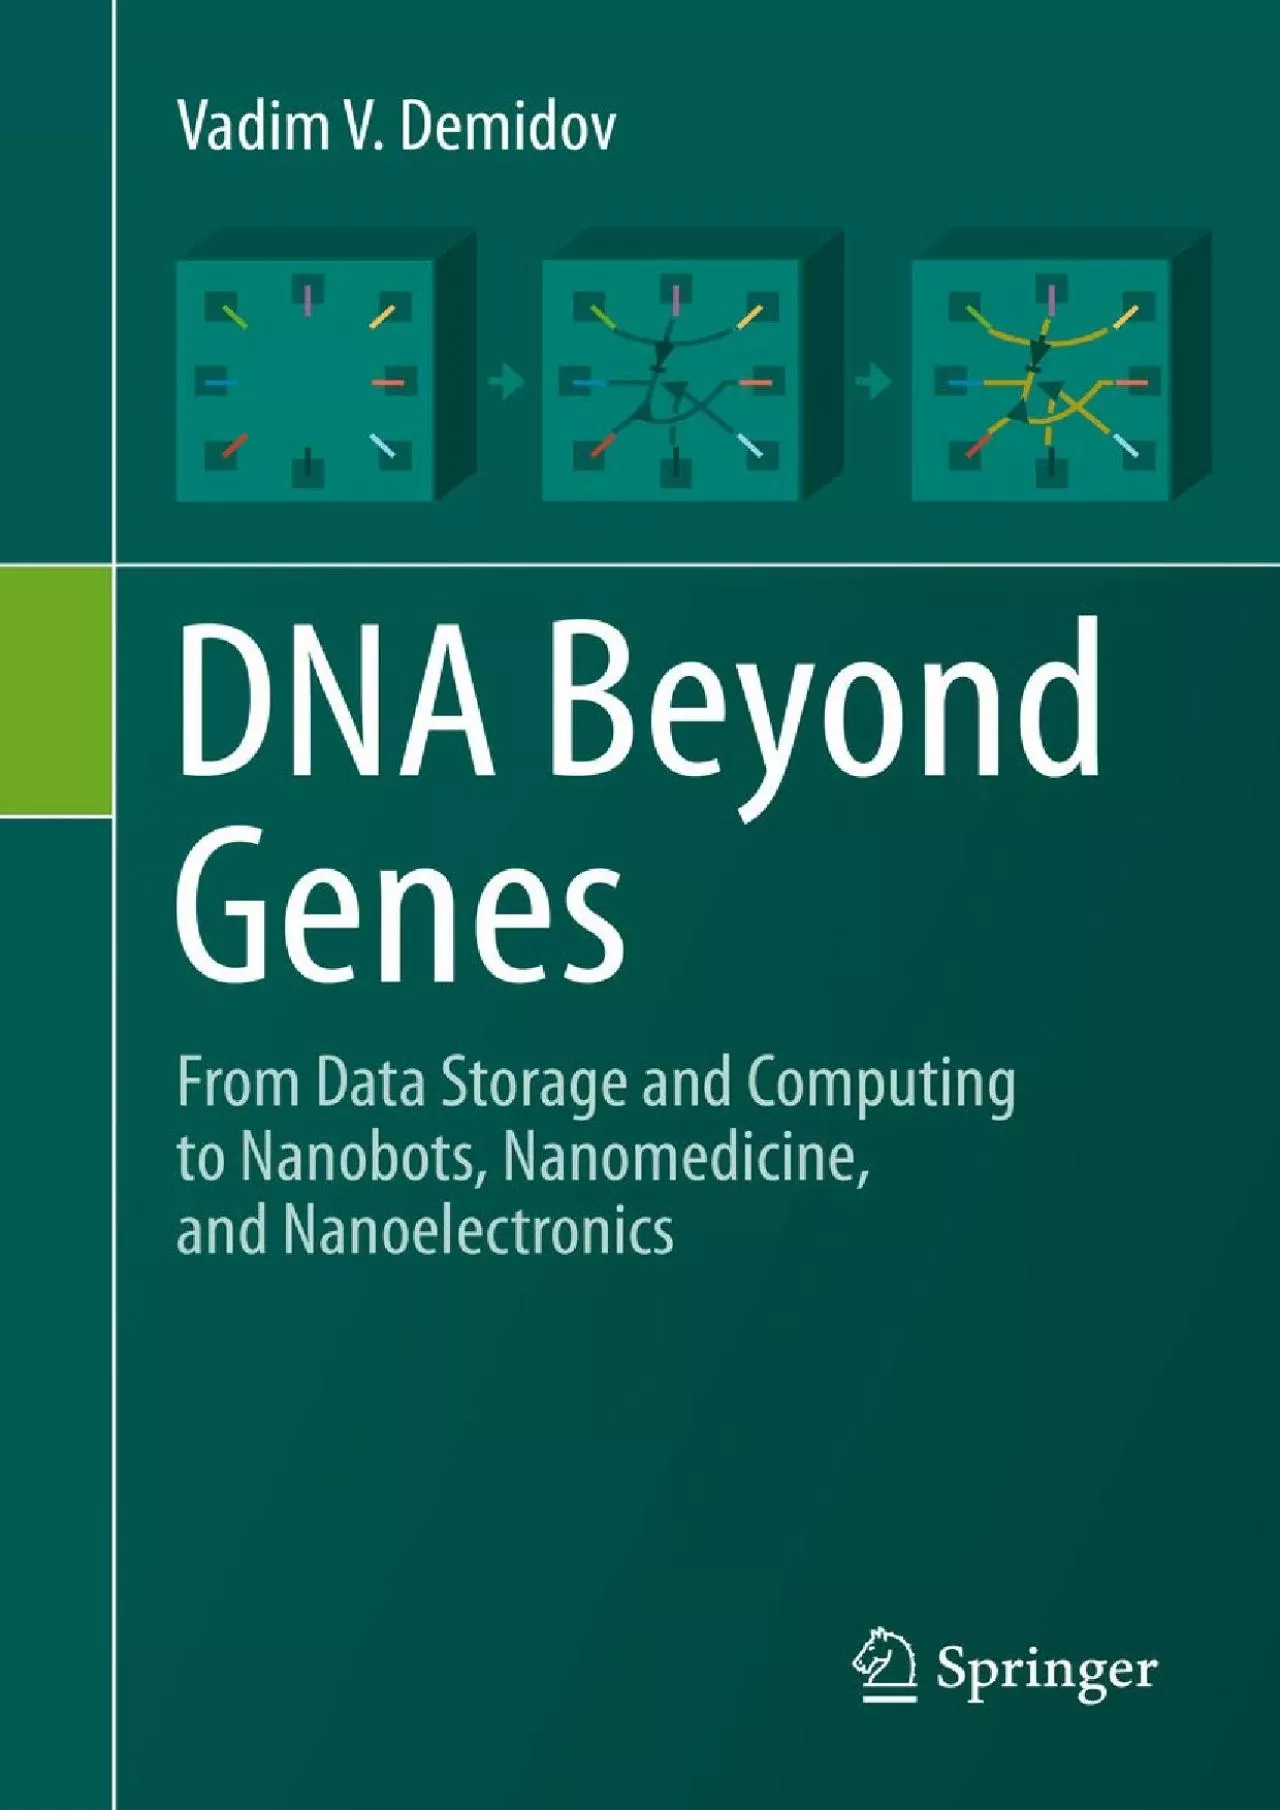 (DOWNLOAD)-DNA Beyond Genes: From Data Storage and Computing to Nanobots, Nanomedicine,